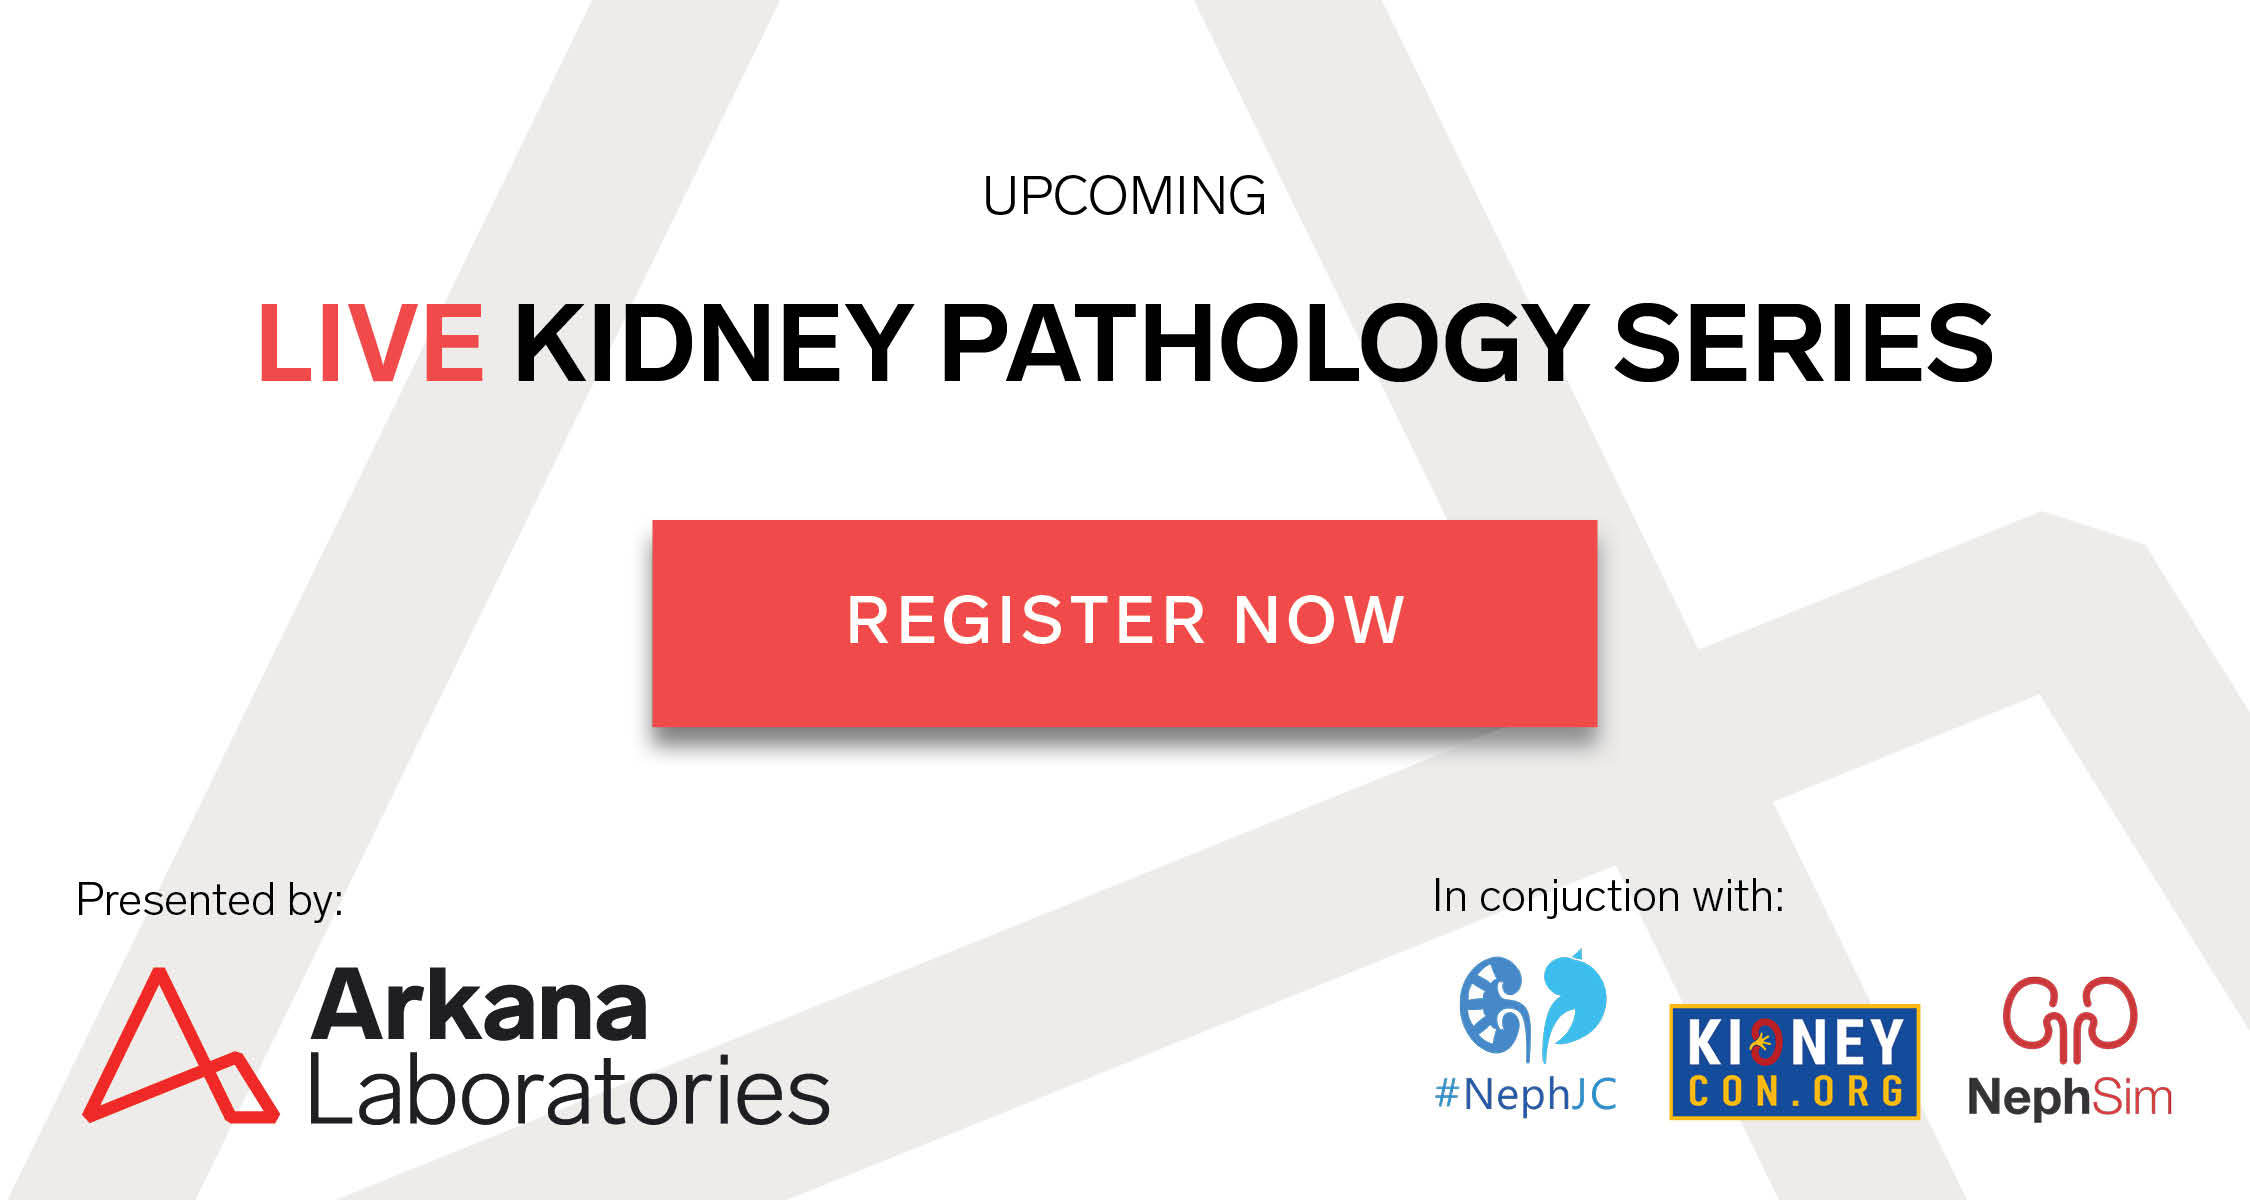 May 2020 Kidney pathology series, Arkana Laboratories